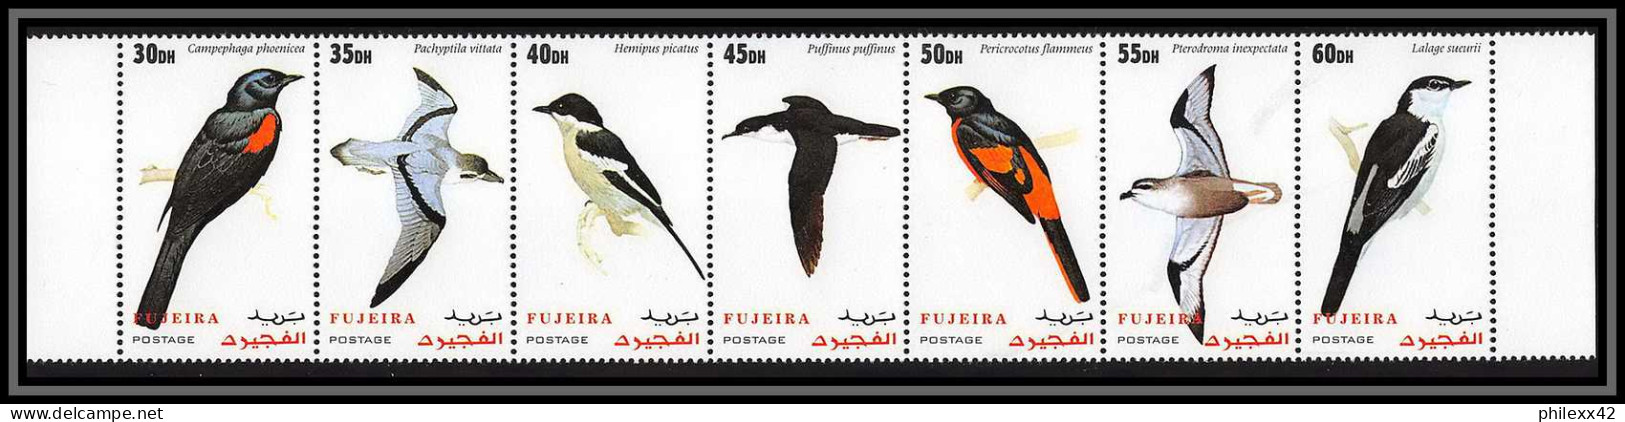 Fujeira - 1532b Bande + Série ** MNH Oiseaux Marin Puffinus Pericrocotus Passereaux Lalage Bird Seabirds NON EMIS RR - Collections, Lots & Series